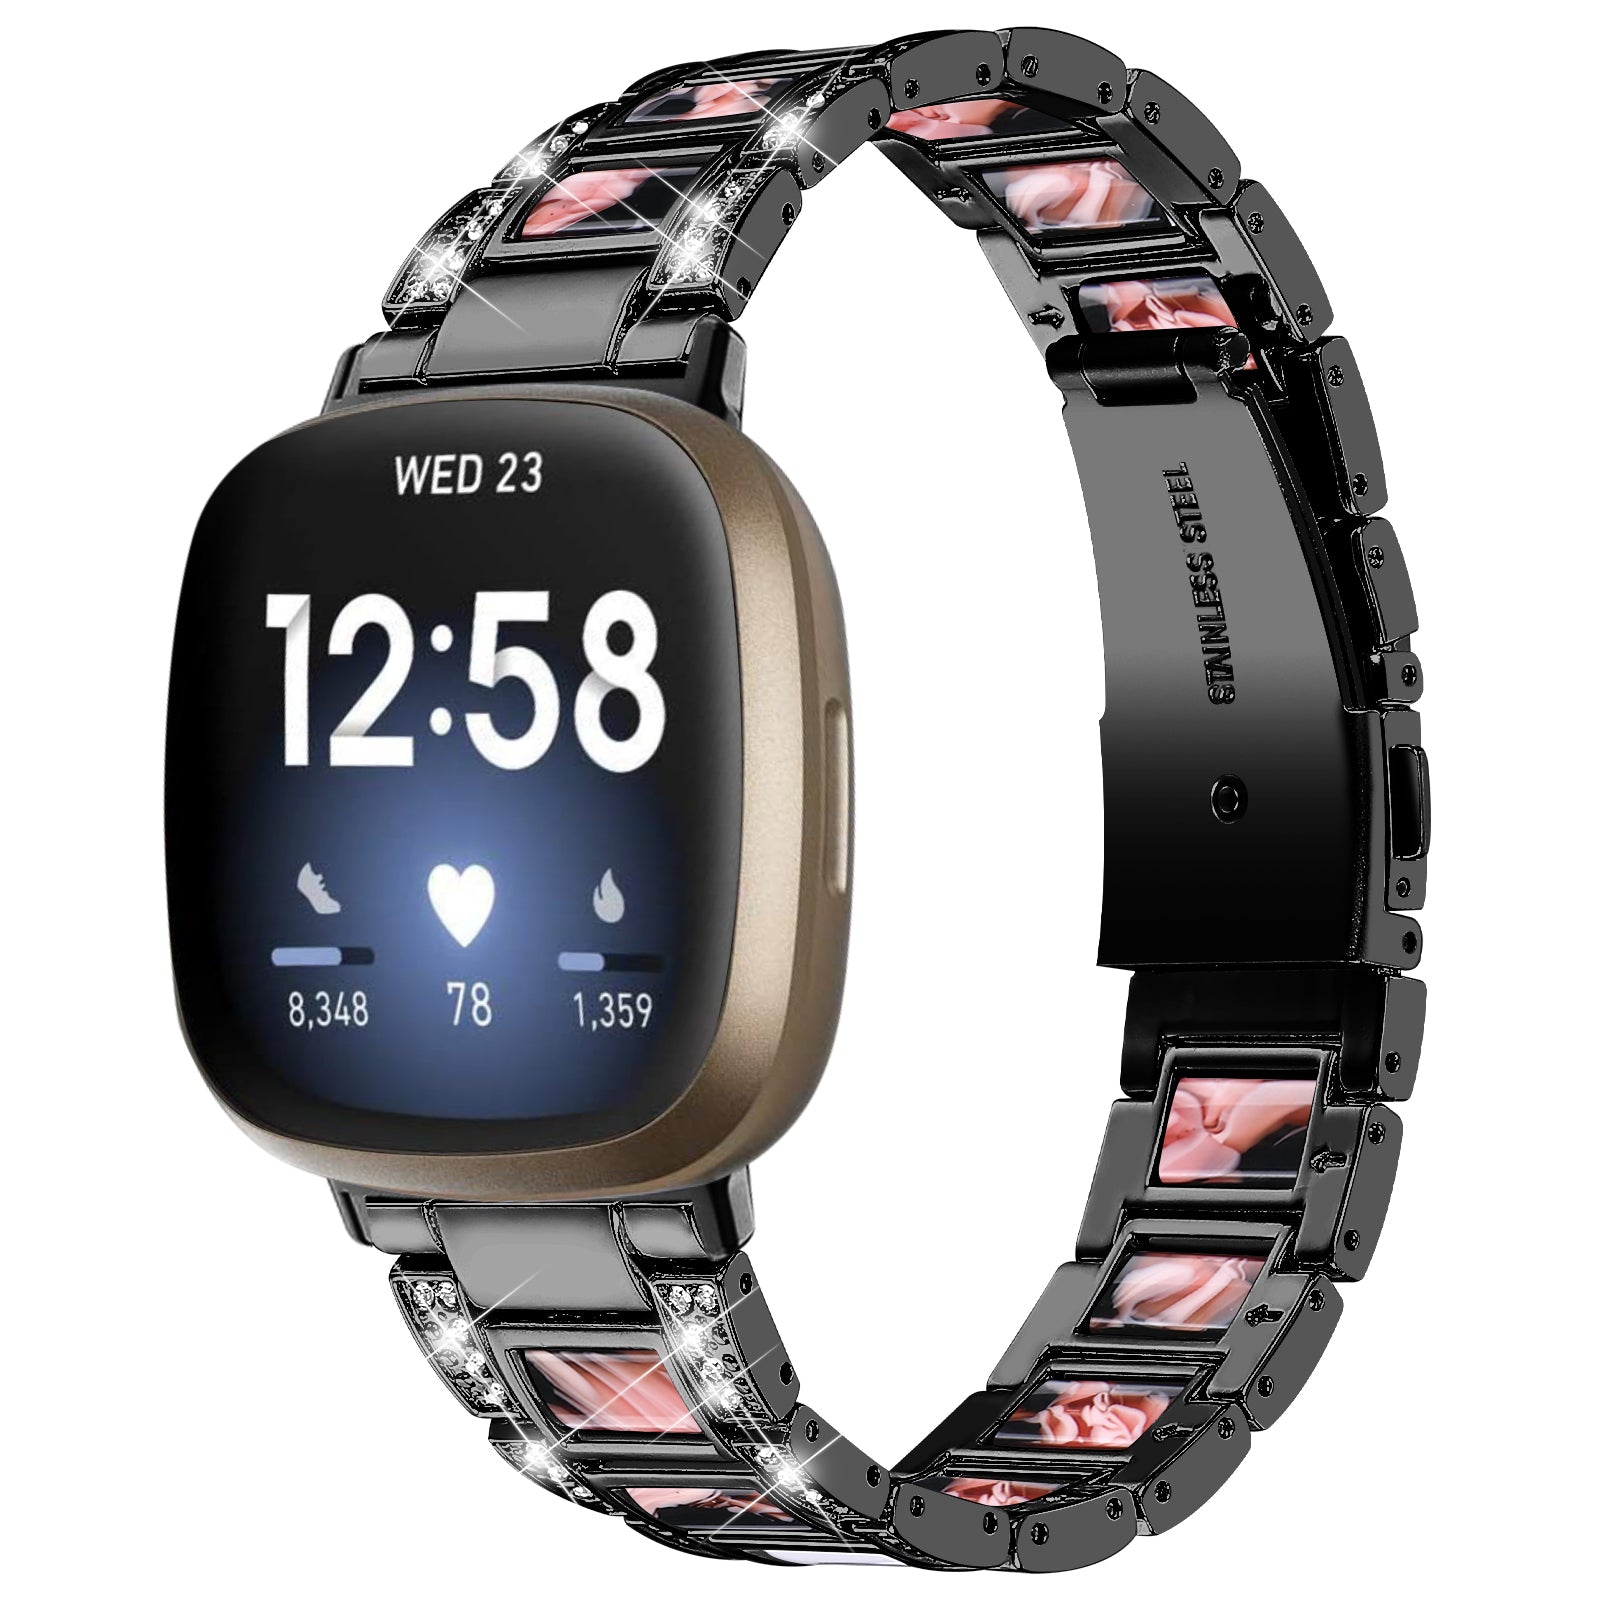 For Fitbit Versa 3 / Sense Stainless Steel Resin Smart Watch Band Replacement Rhinestone Decor Fashionable Wrist Strap - Black / Black Pink Mix